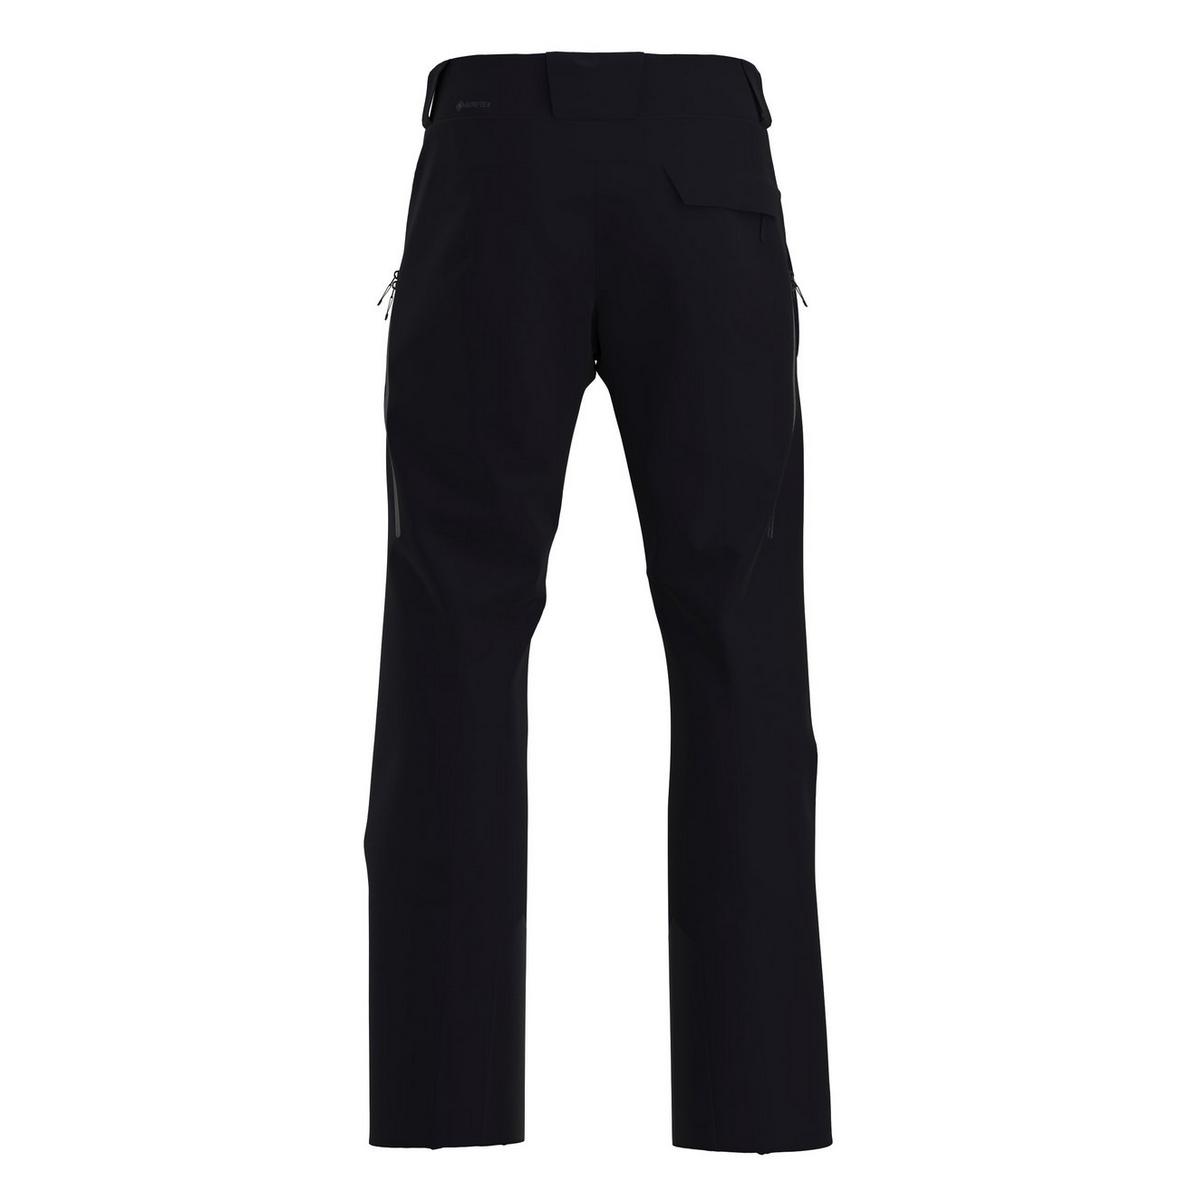 Arc'teryx Men's Macai Insulated Ski Pants - Black